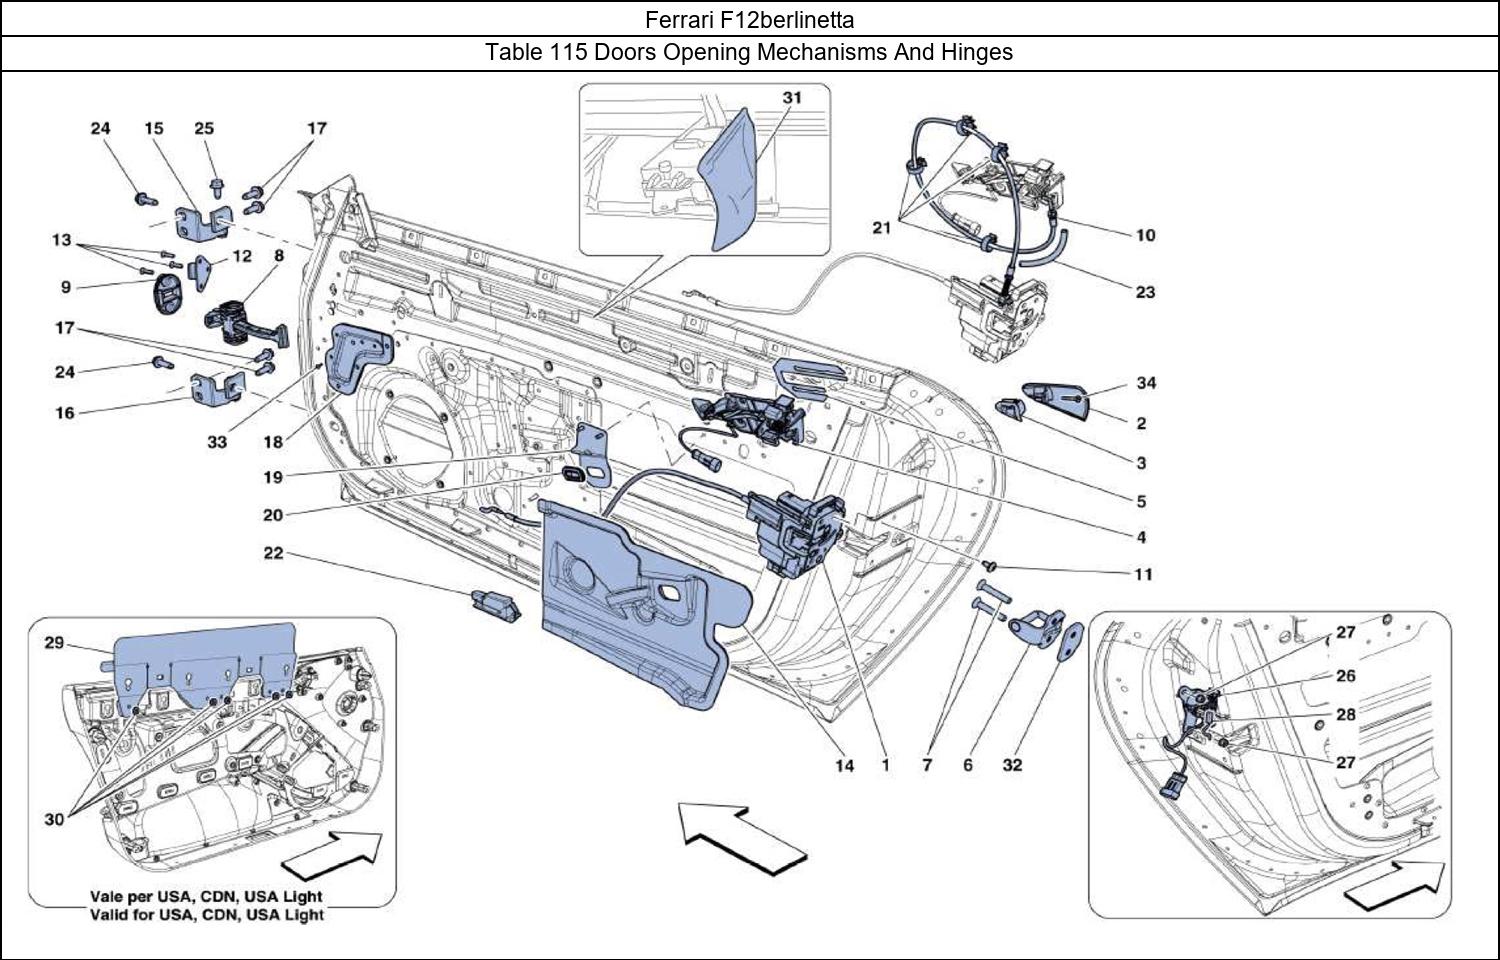 Ferrari Parts Ferrari F12berlinetta Table 115 Doors Opening Mechanisms And Hinges